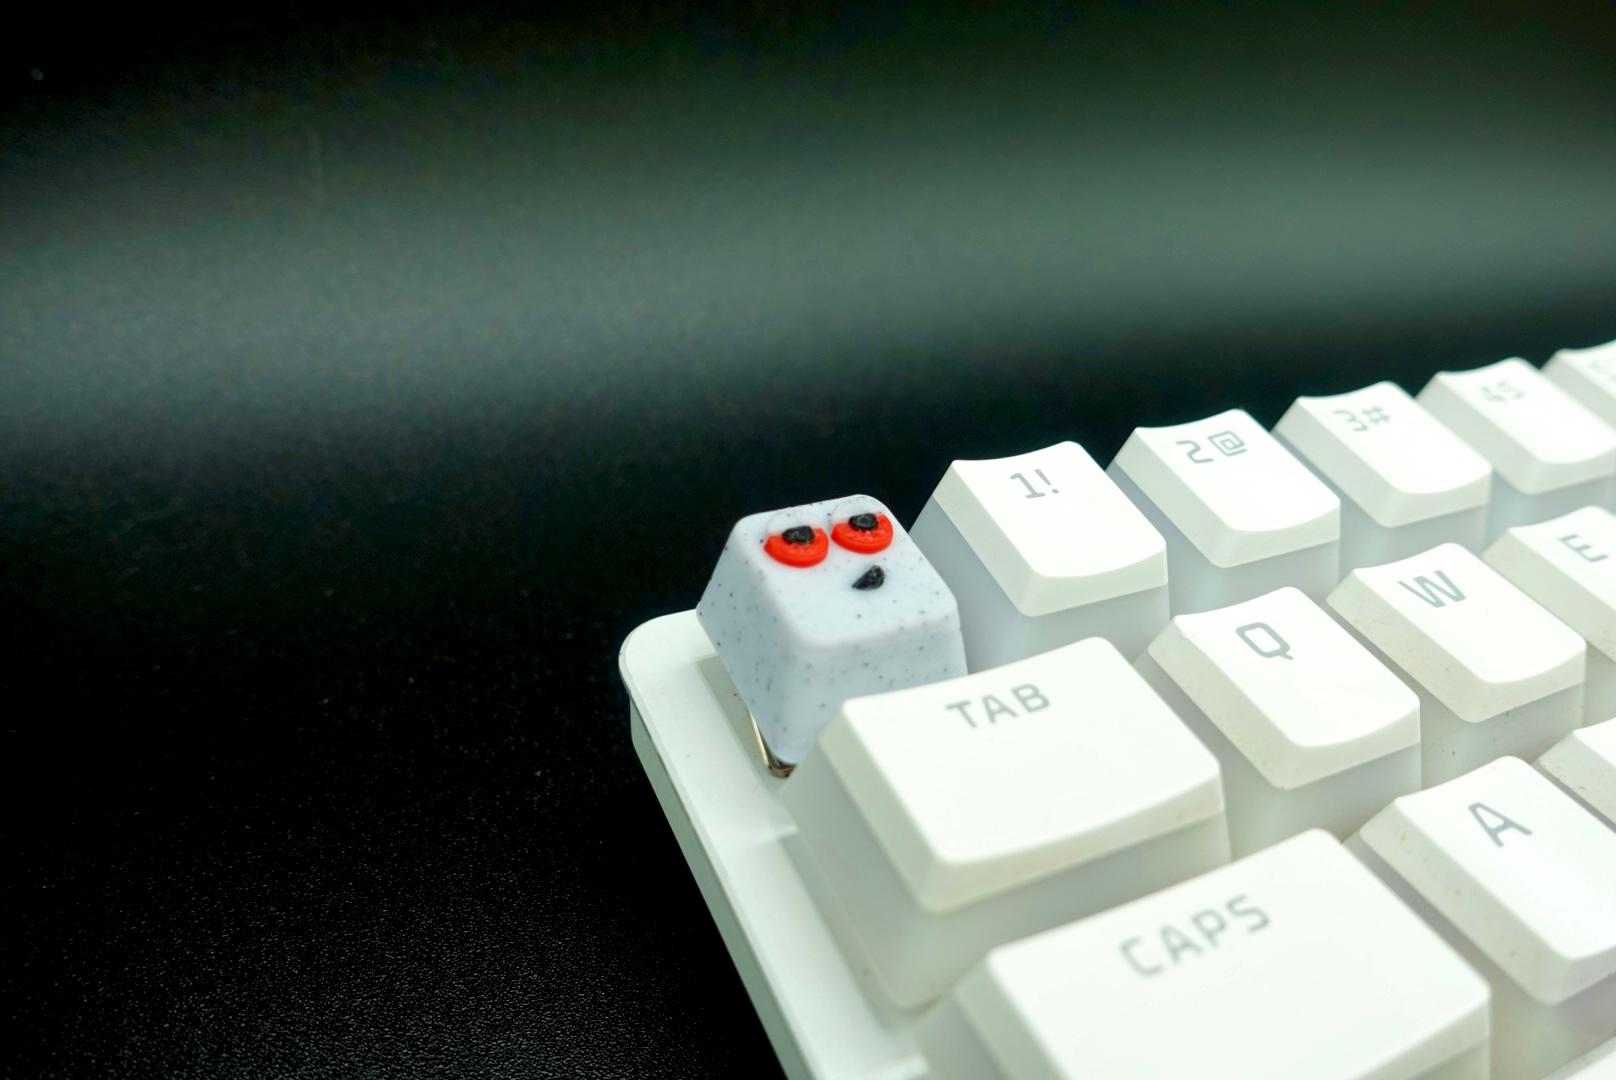 Chill Buddy Keycap (Mechanical Keyboard) 3d model